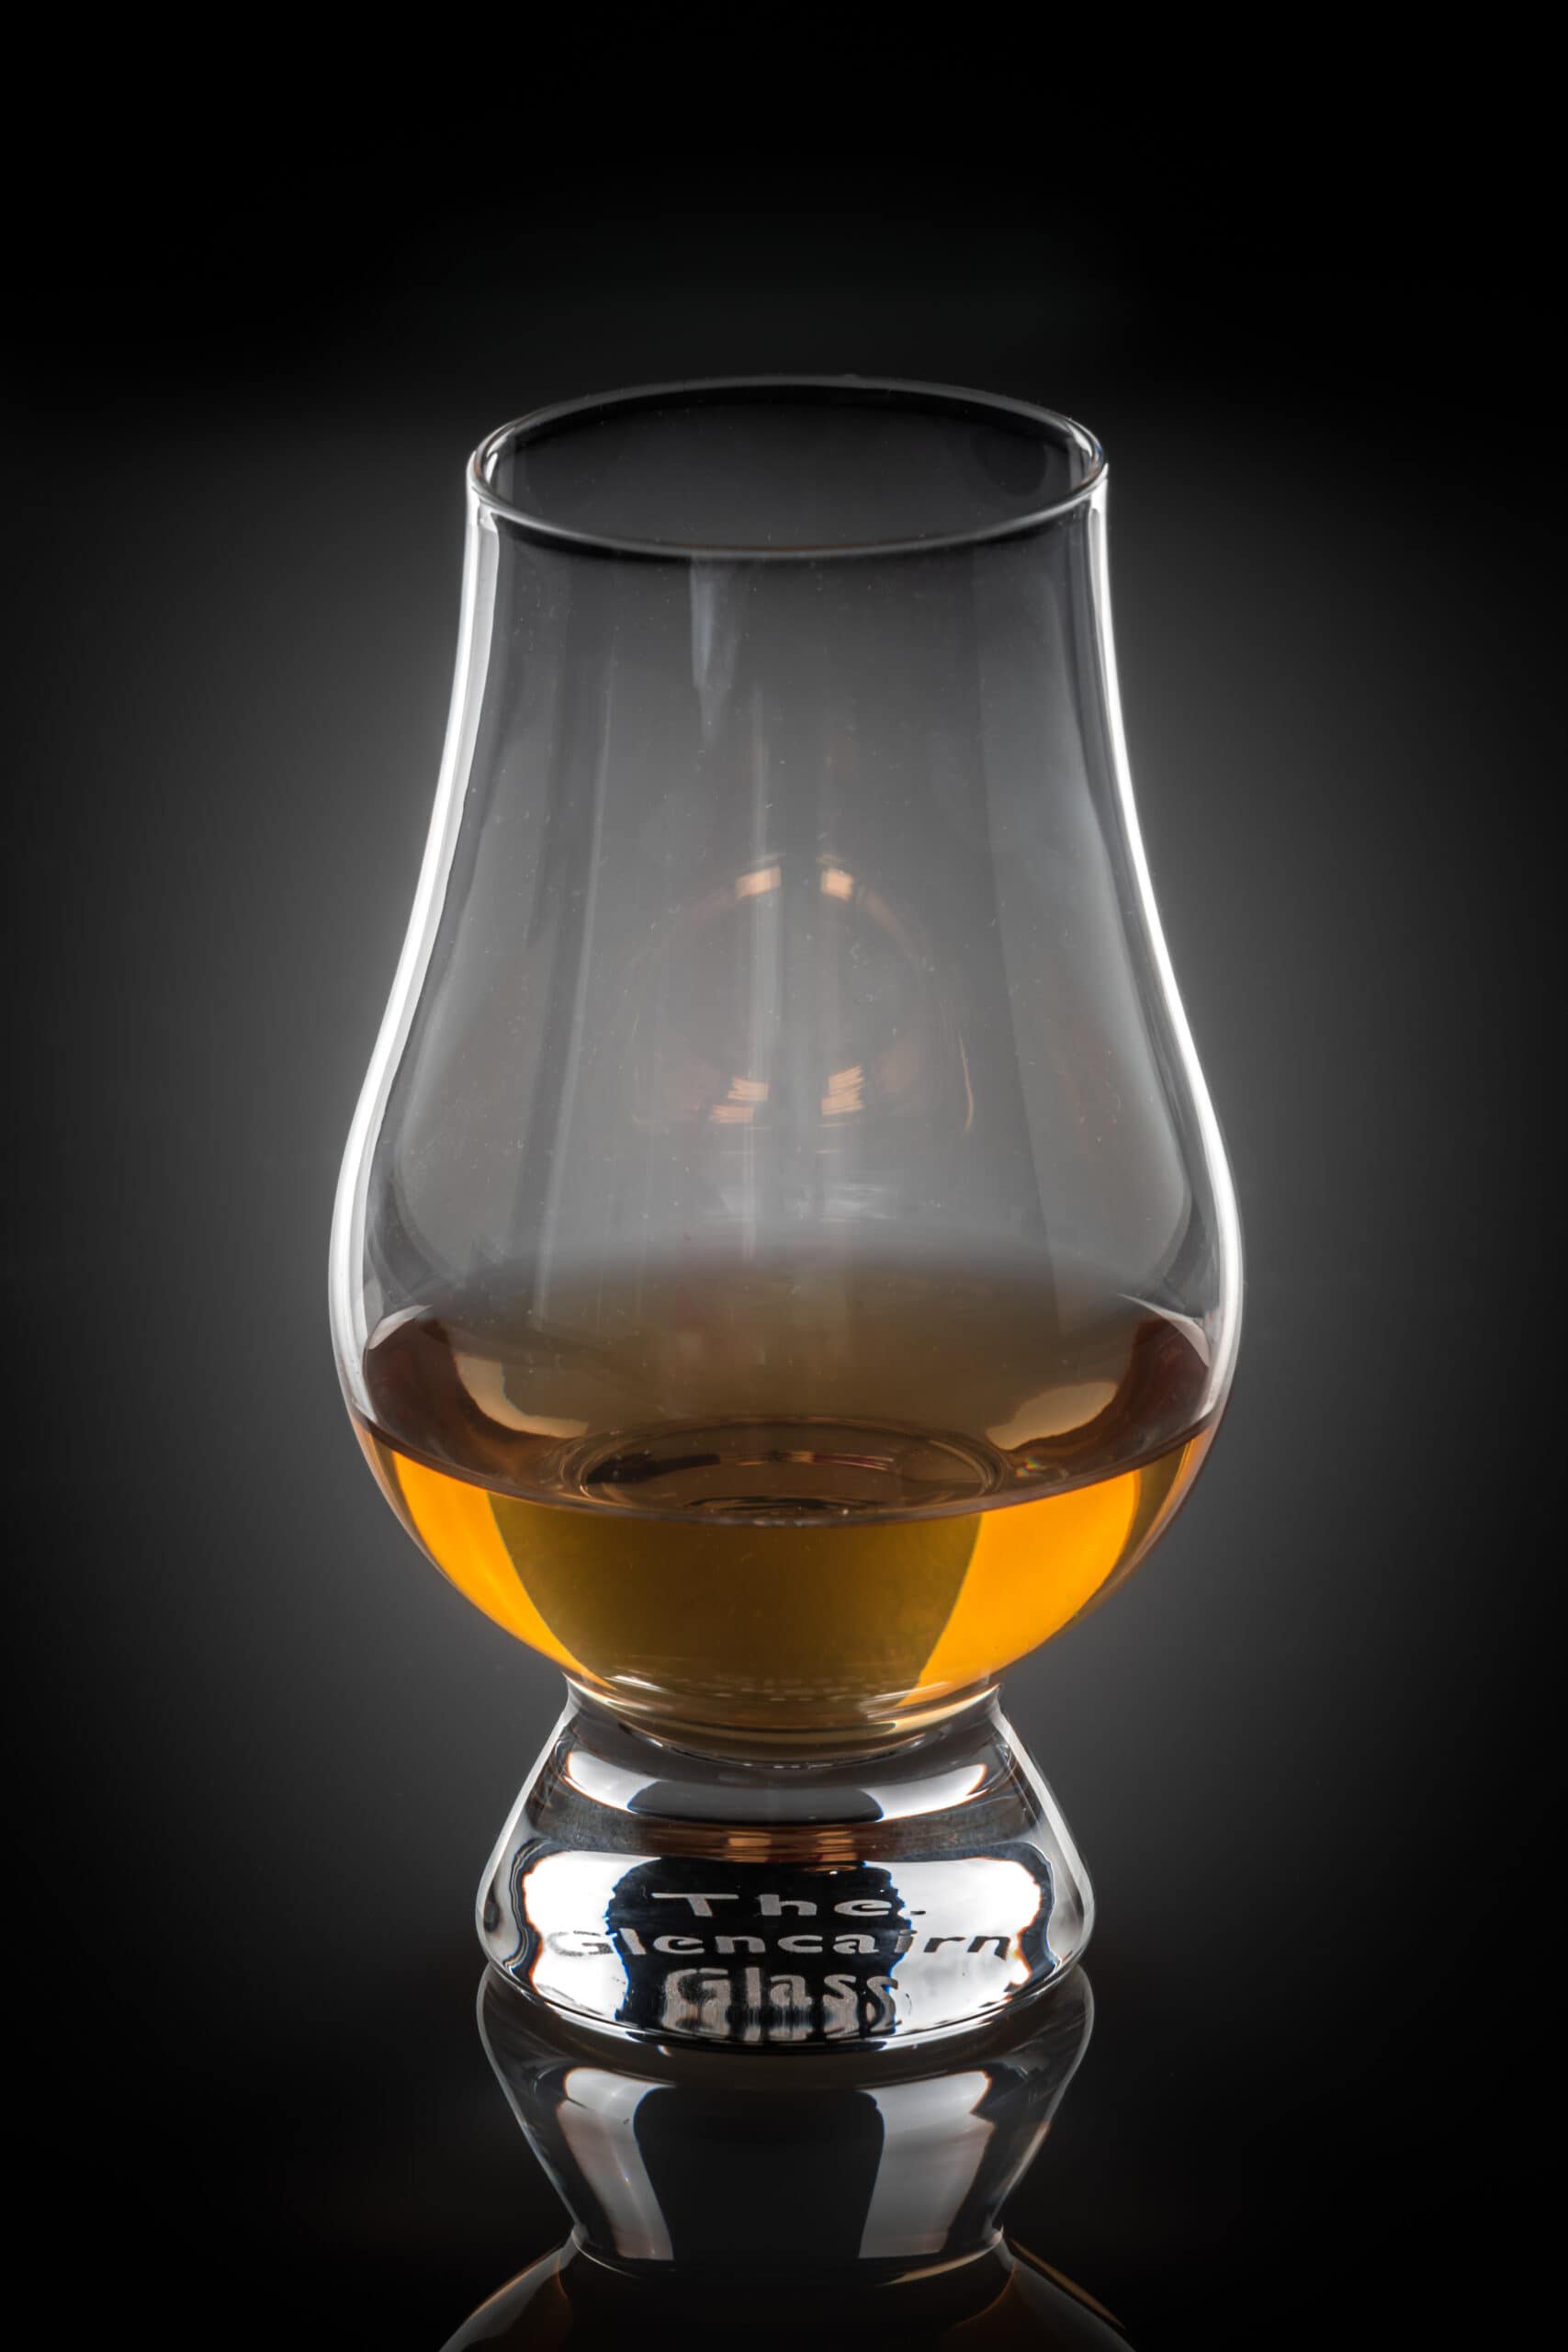 A photo of a Glencairn whisky glass